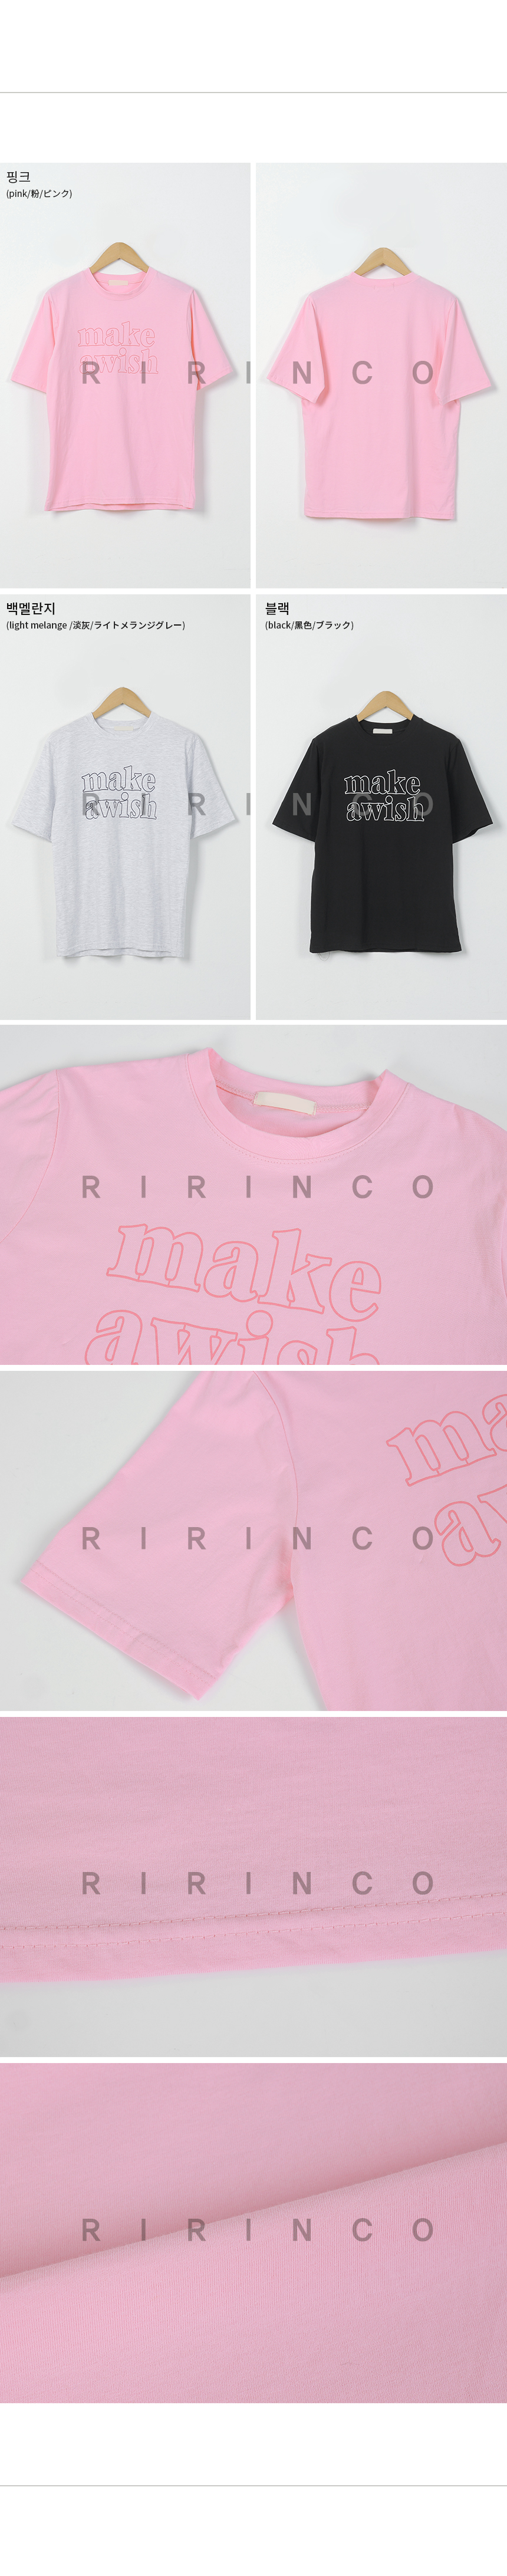 RIRINCO ラウンドネックロゴプリント半袖Tシャツ